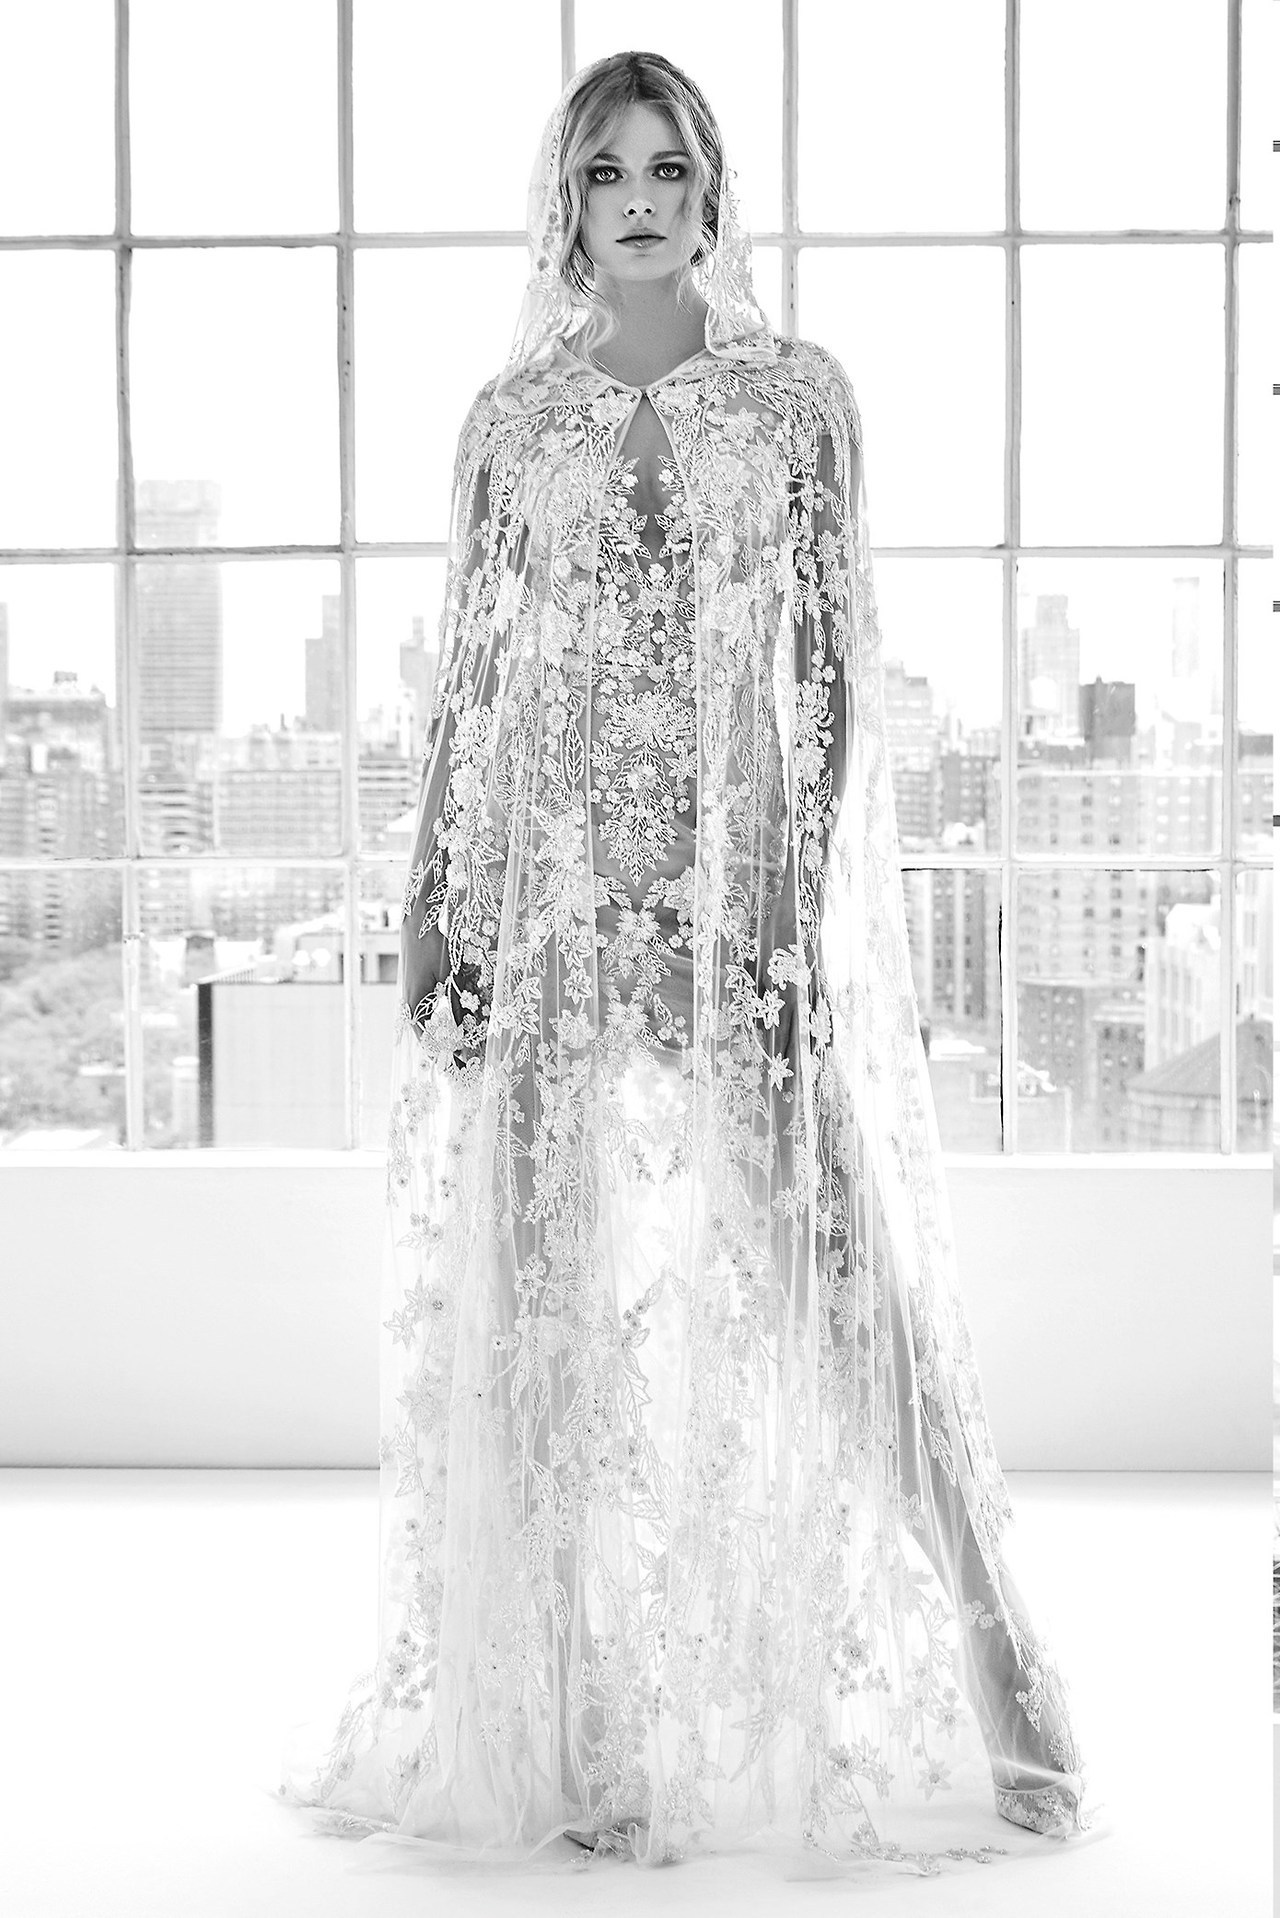 the-fashion-dish:
“ perfectweddingdresses:
“Zuhair Murad • Spring 2018
”
Spring 2018 Bridal Couture
”